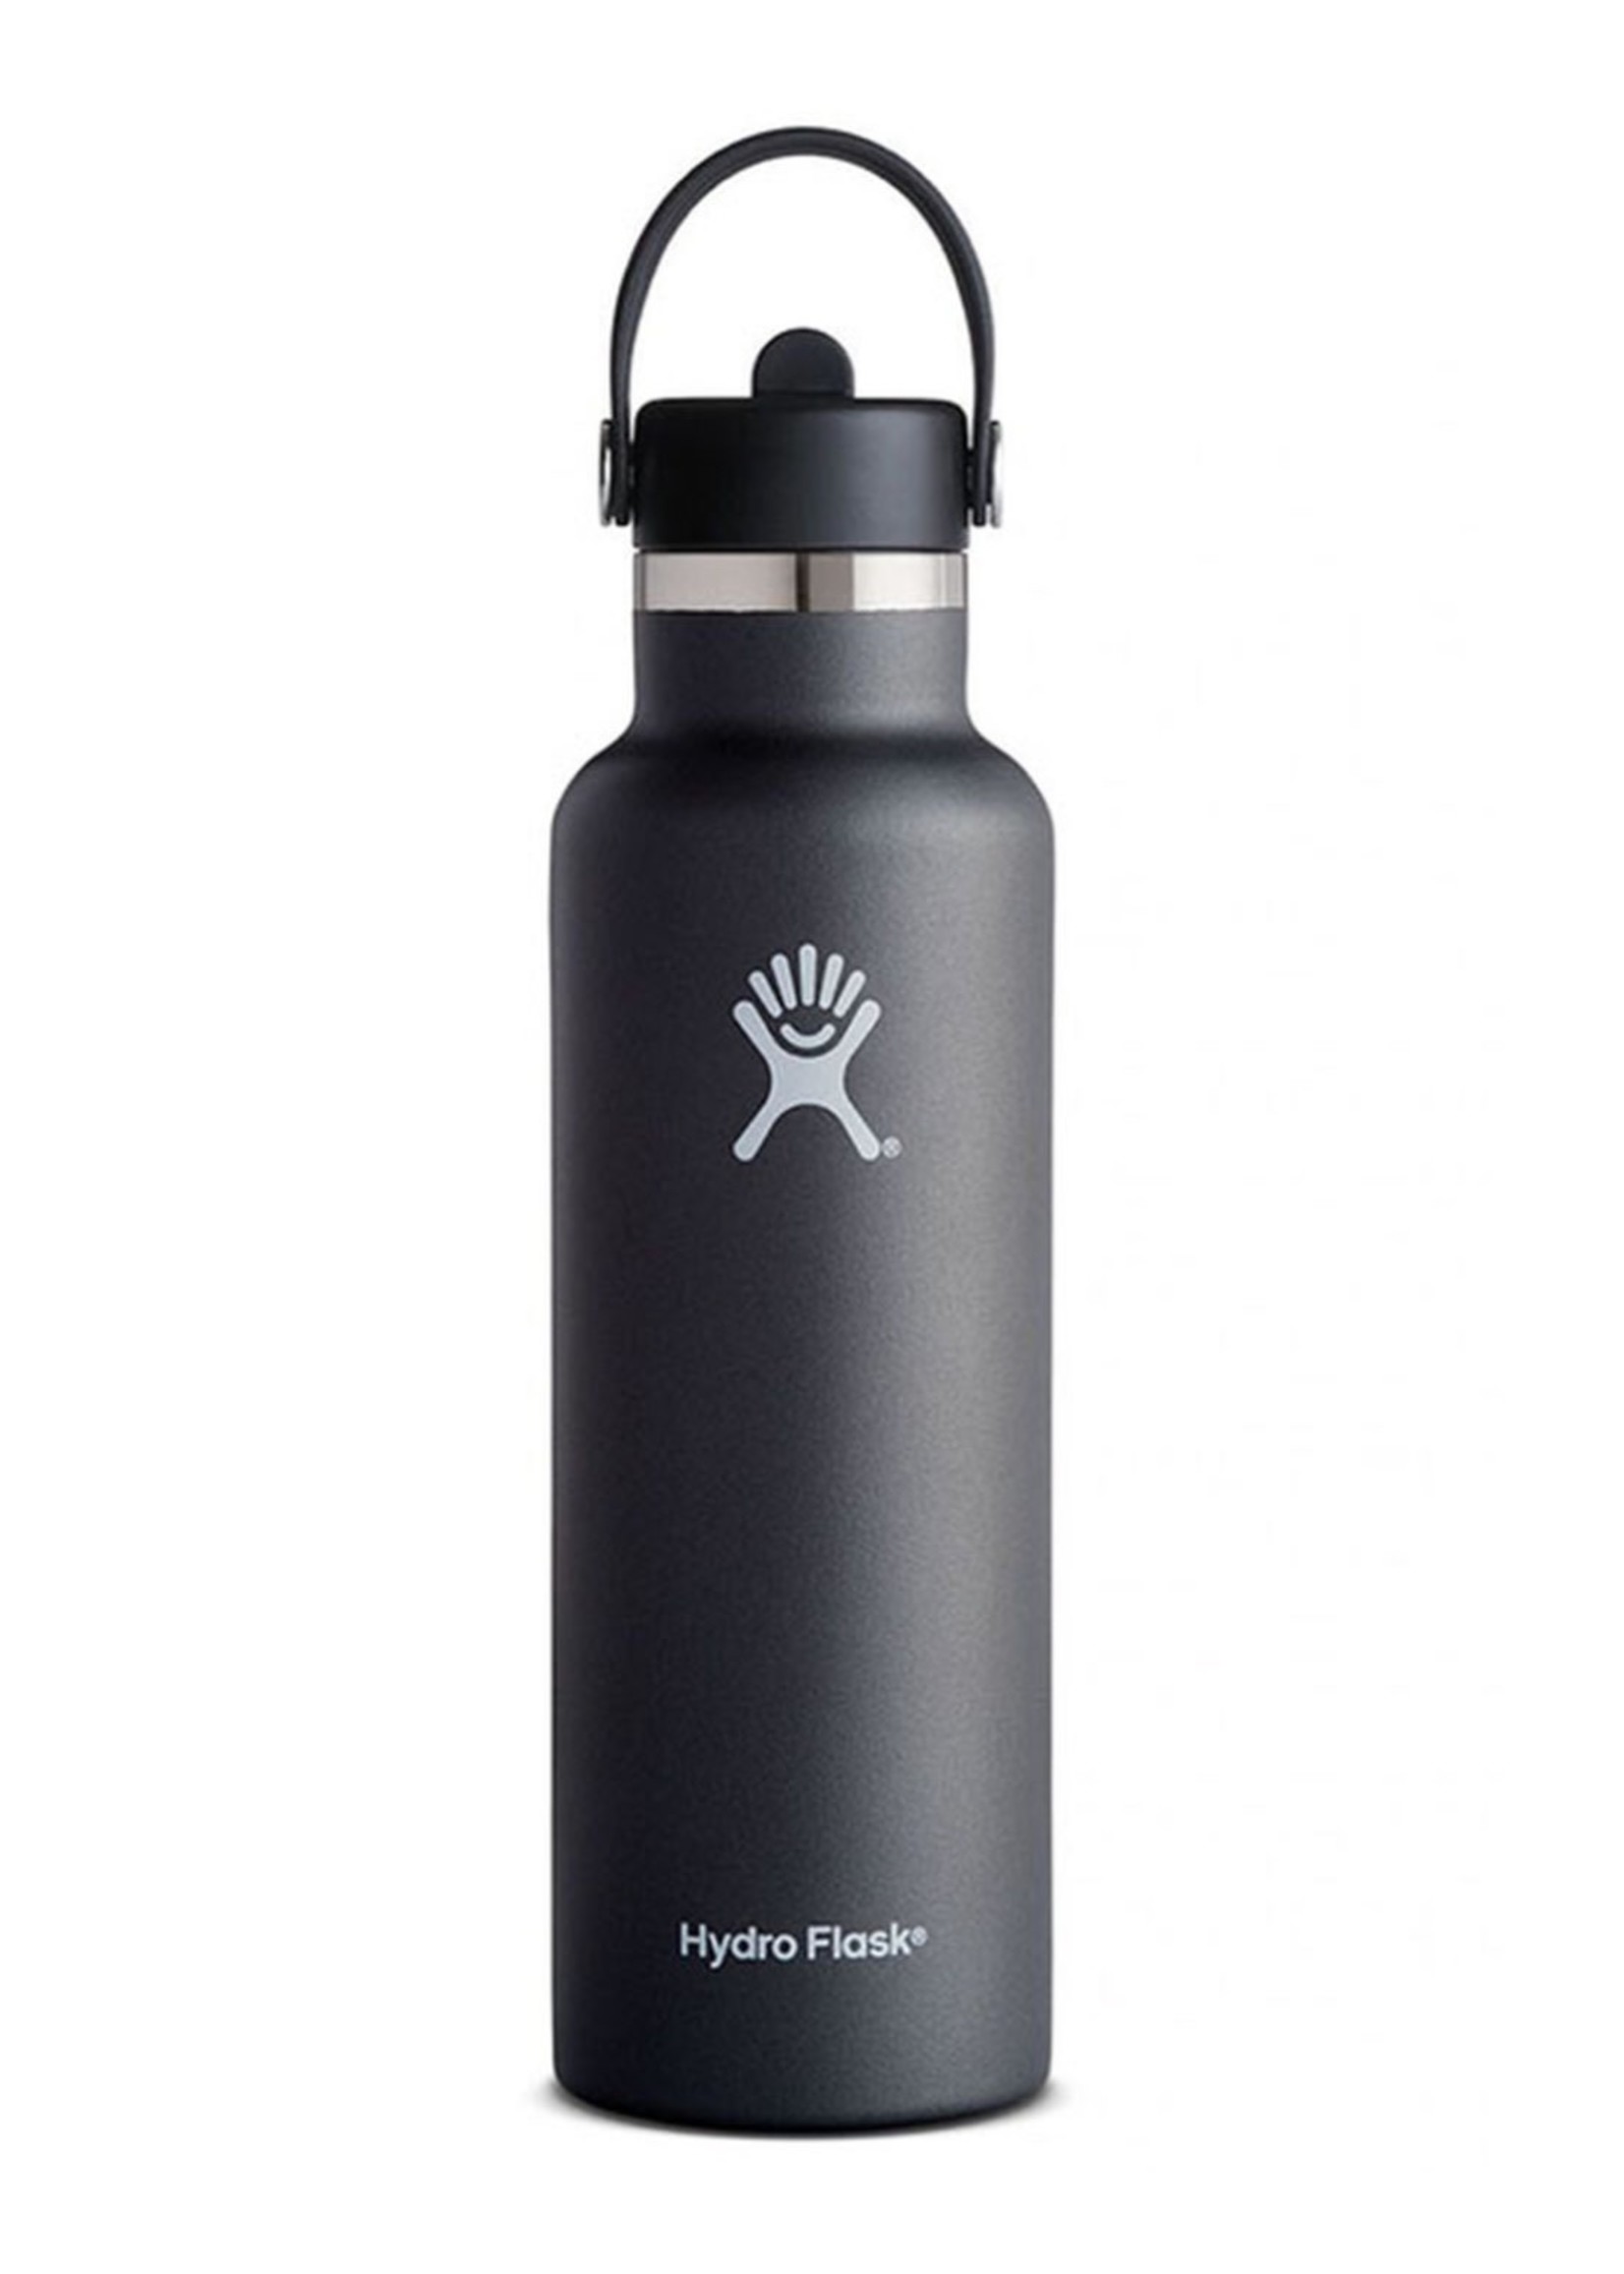 Hydro Flask Hydro Flask, 21oz Standard Mouth with Flex Straw Cap in Black